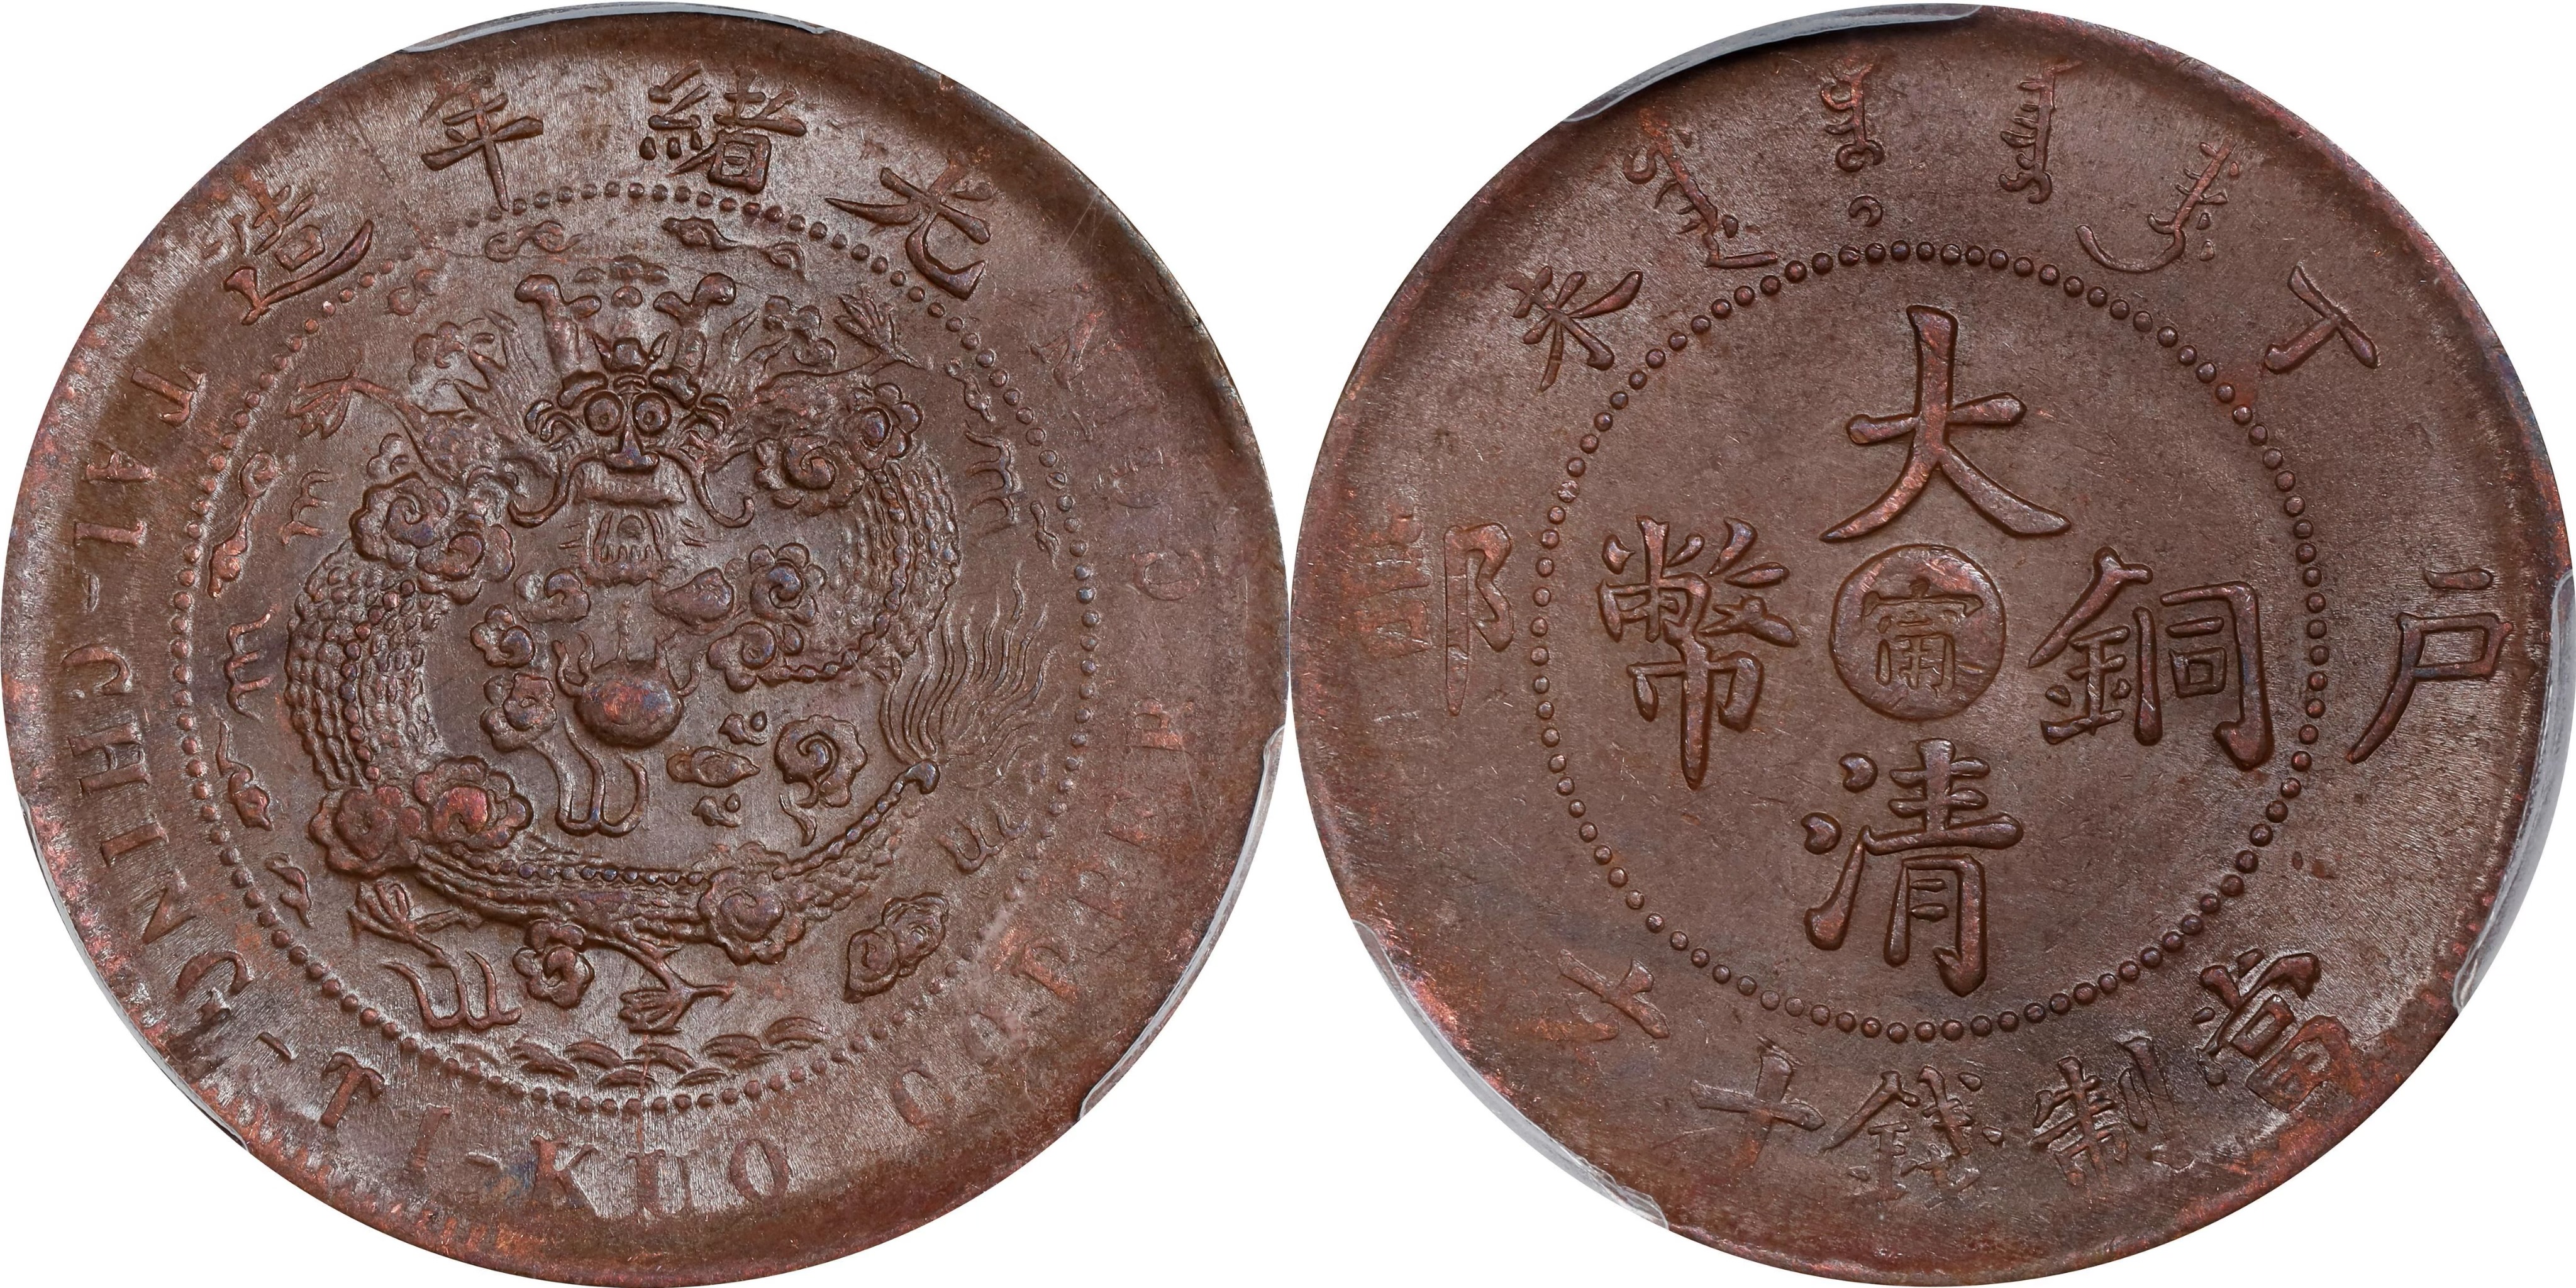 CASH375 China Kiangnan. 10 Cash, CD (1907). PCGS MS62 Brown